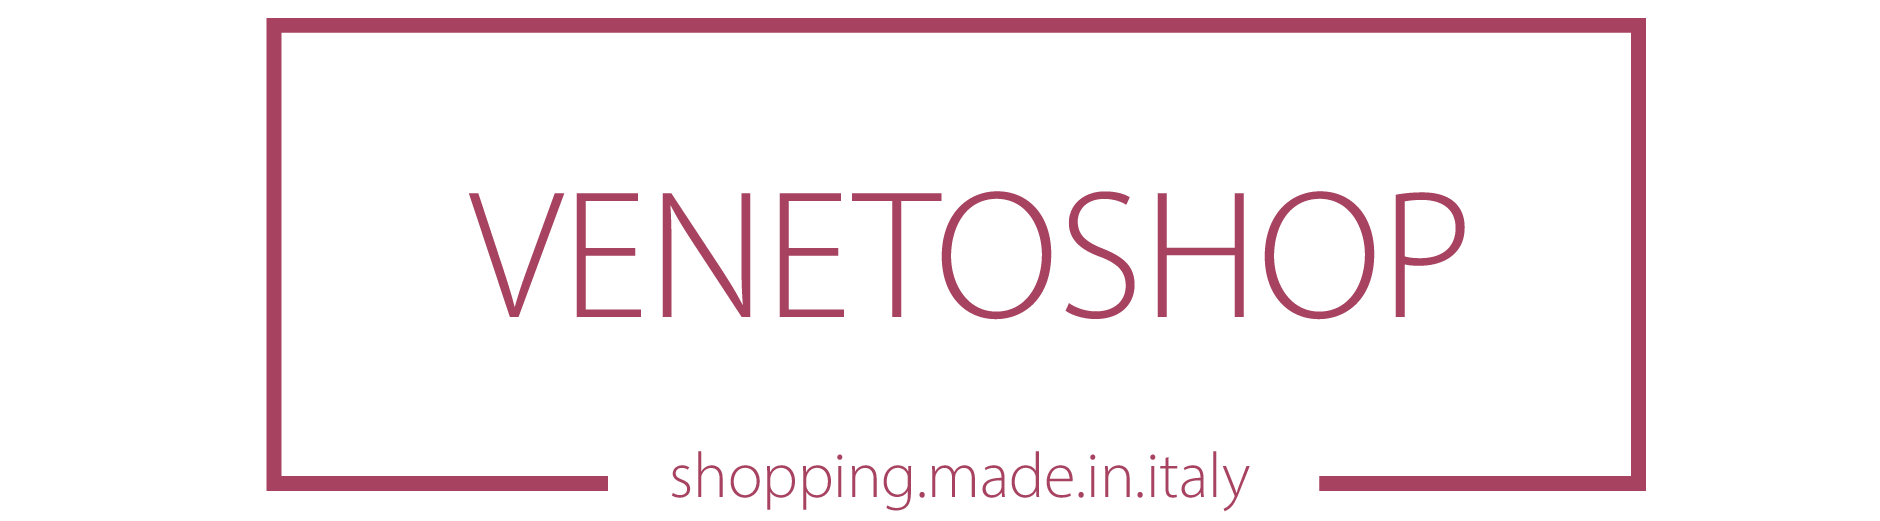 Venetoshop.com